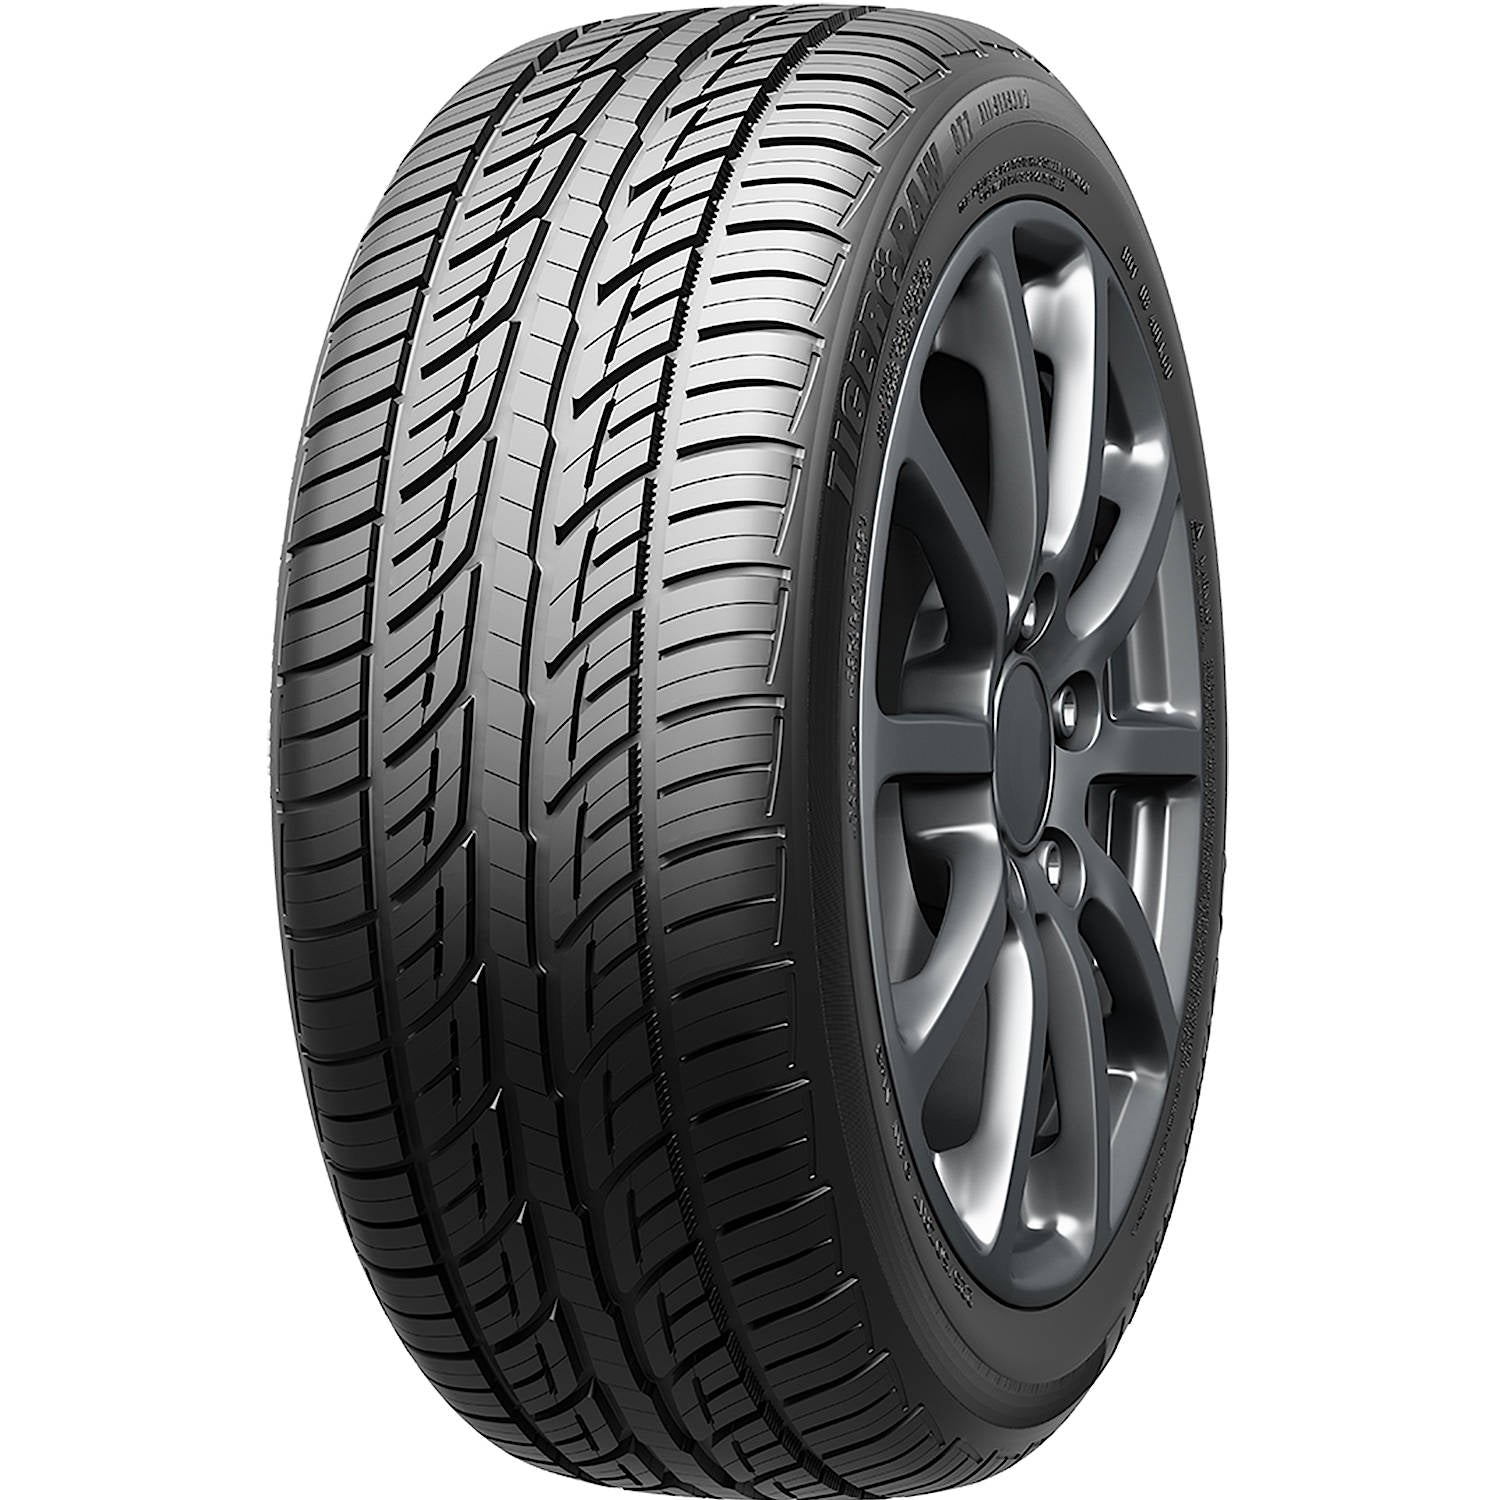 UNIROYAL TIGER PAW GTZ A/S 2 225/60R18 (28.6X8.9R 18) Tires